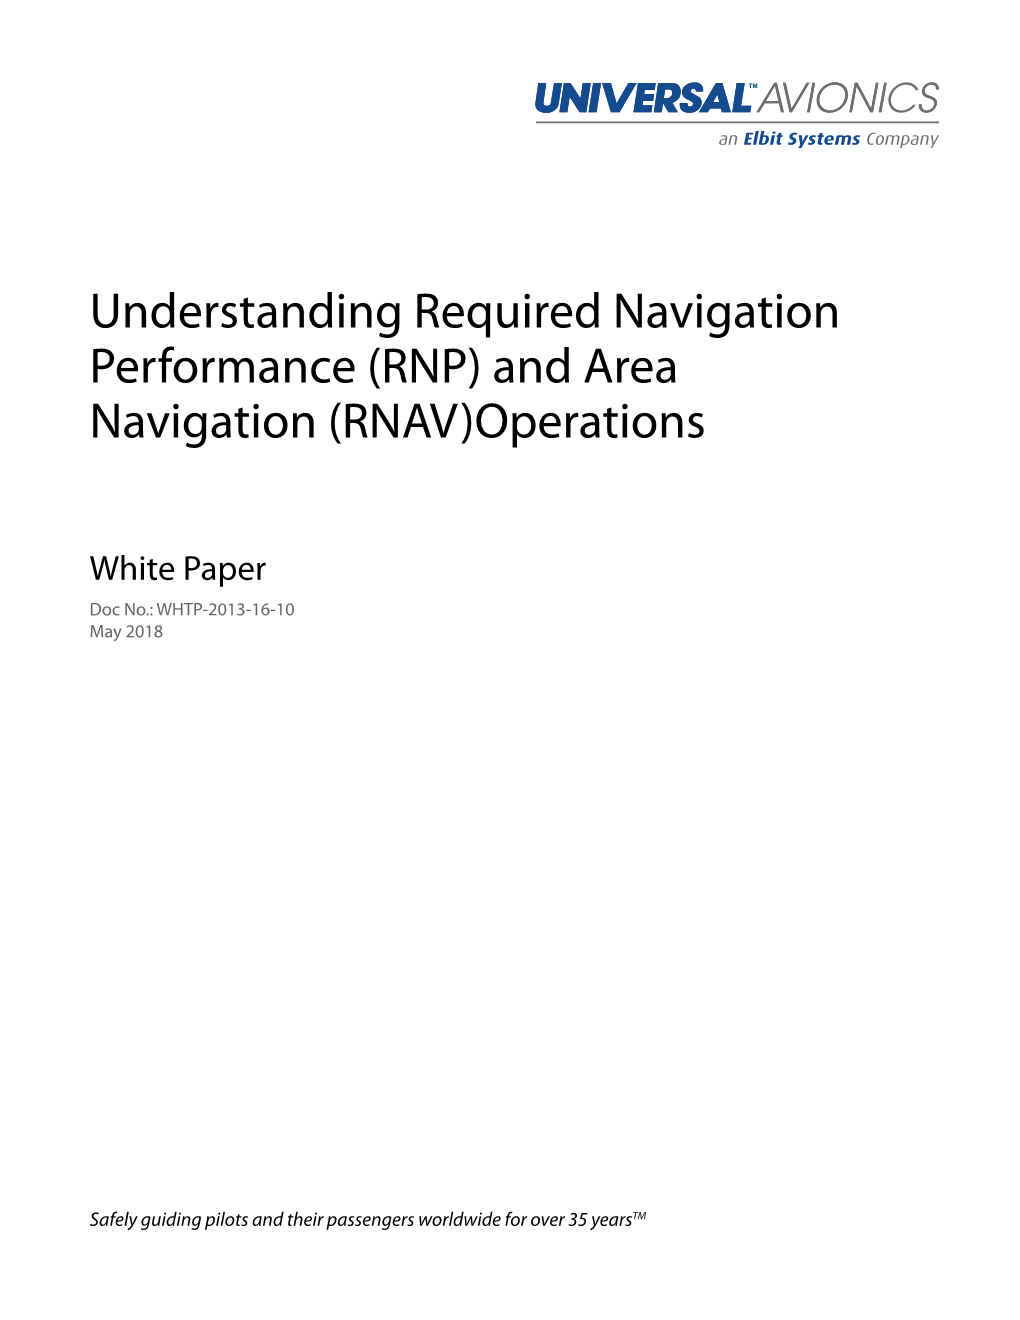 RNP) and Area Navigation (RNAV)Operations